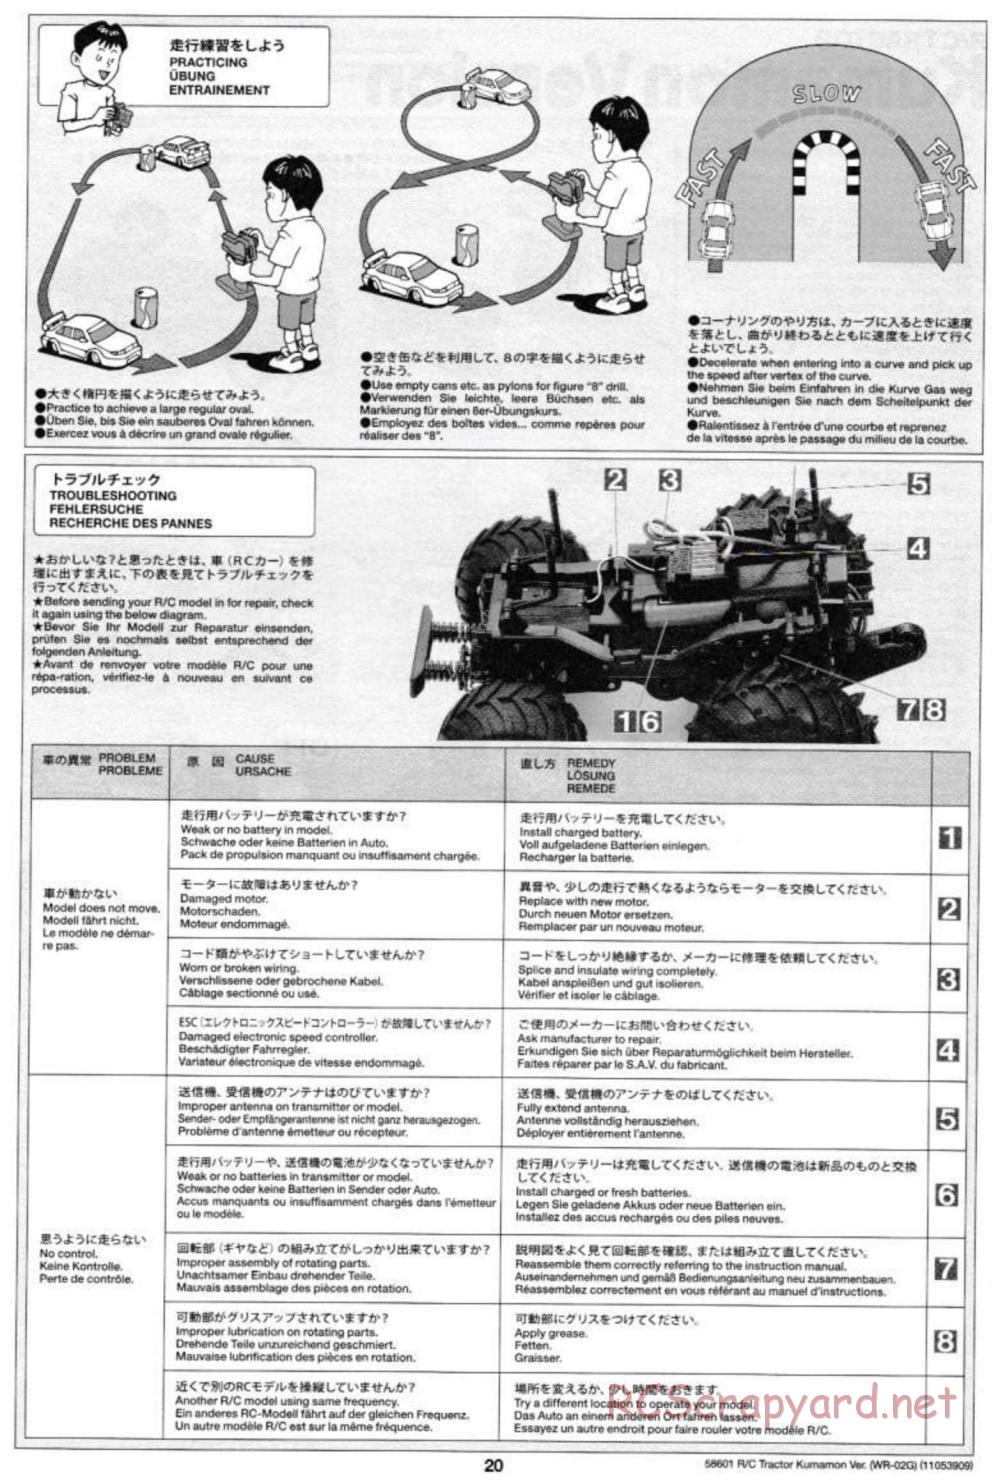 Tamiya - Tractor Kumamon Version Chassis - Manual - Page 20